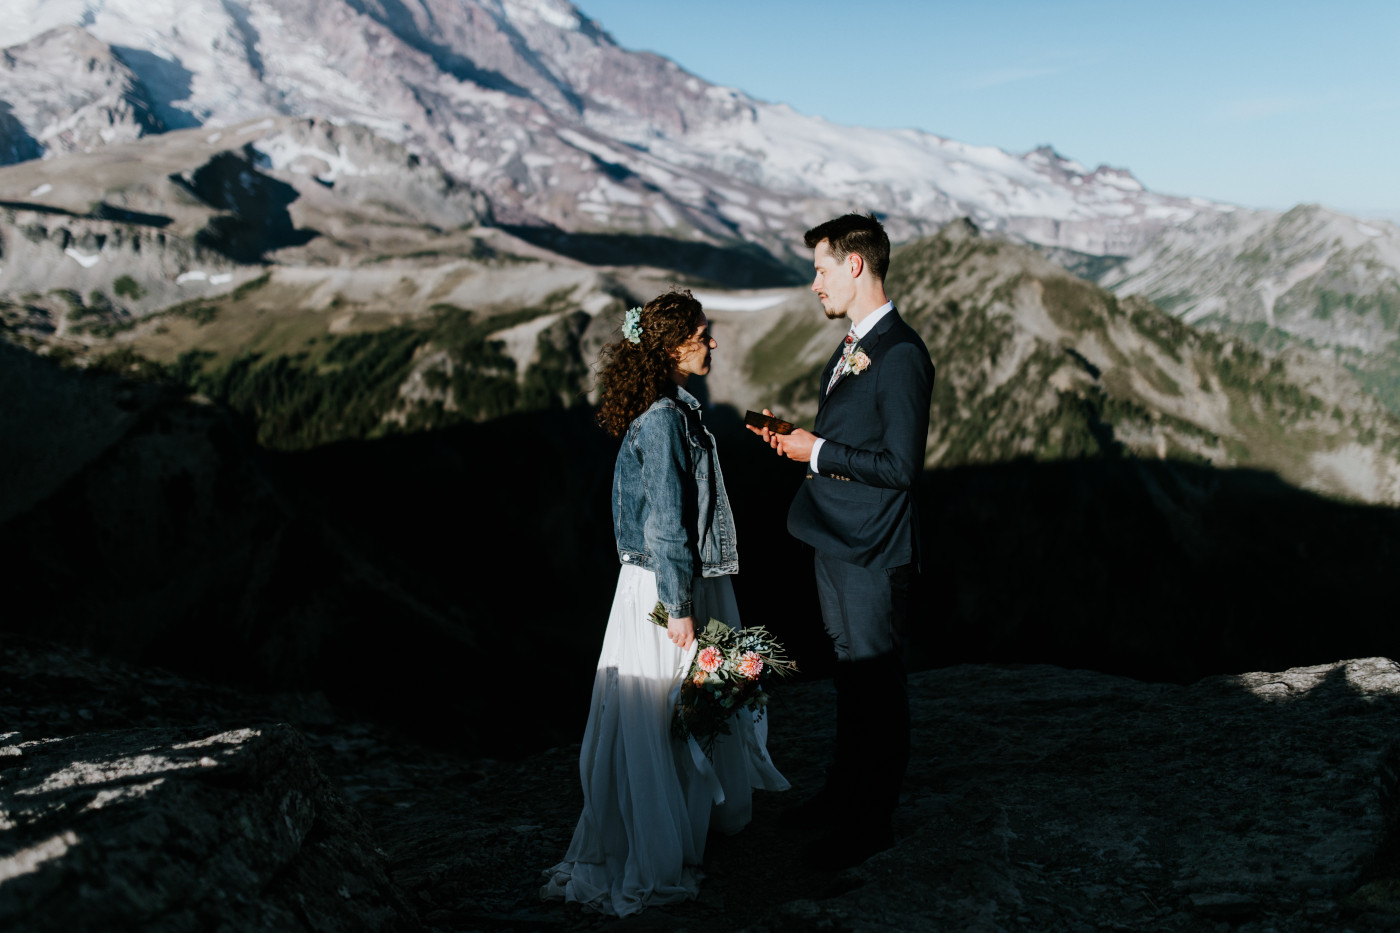 Chad and Tasha read vows. Elopement photography at Mount Rainier by Sienna Plus Josh.